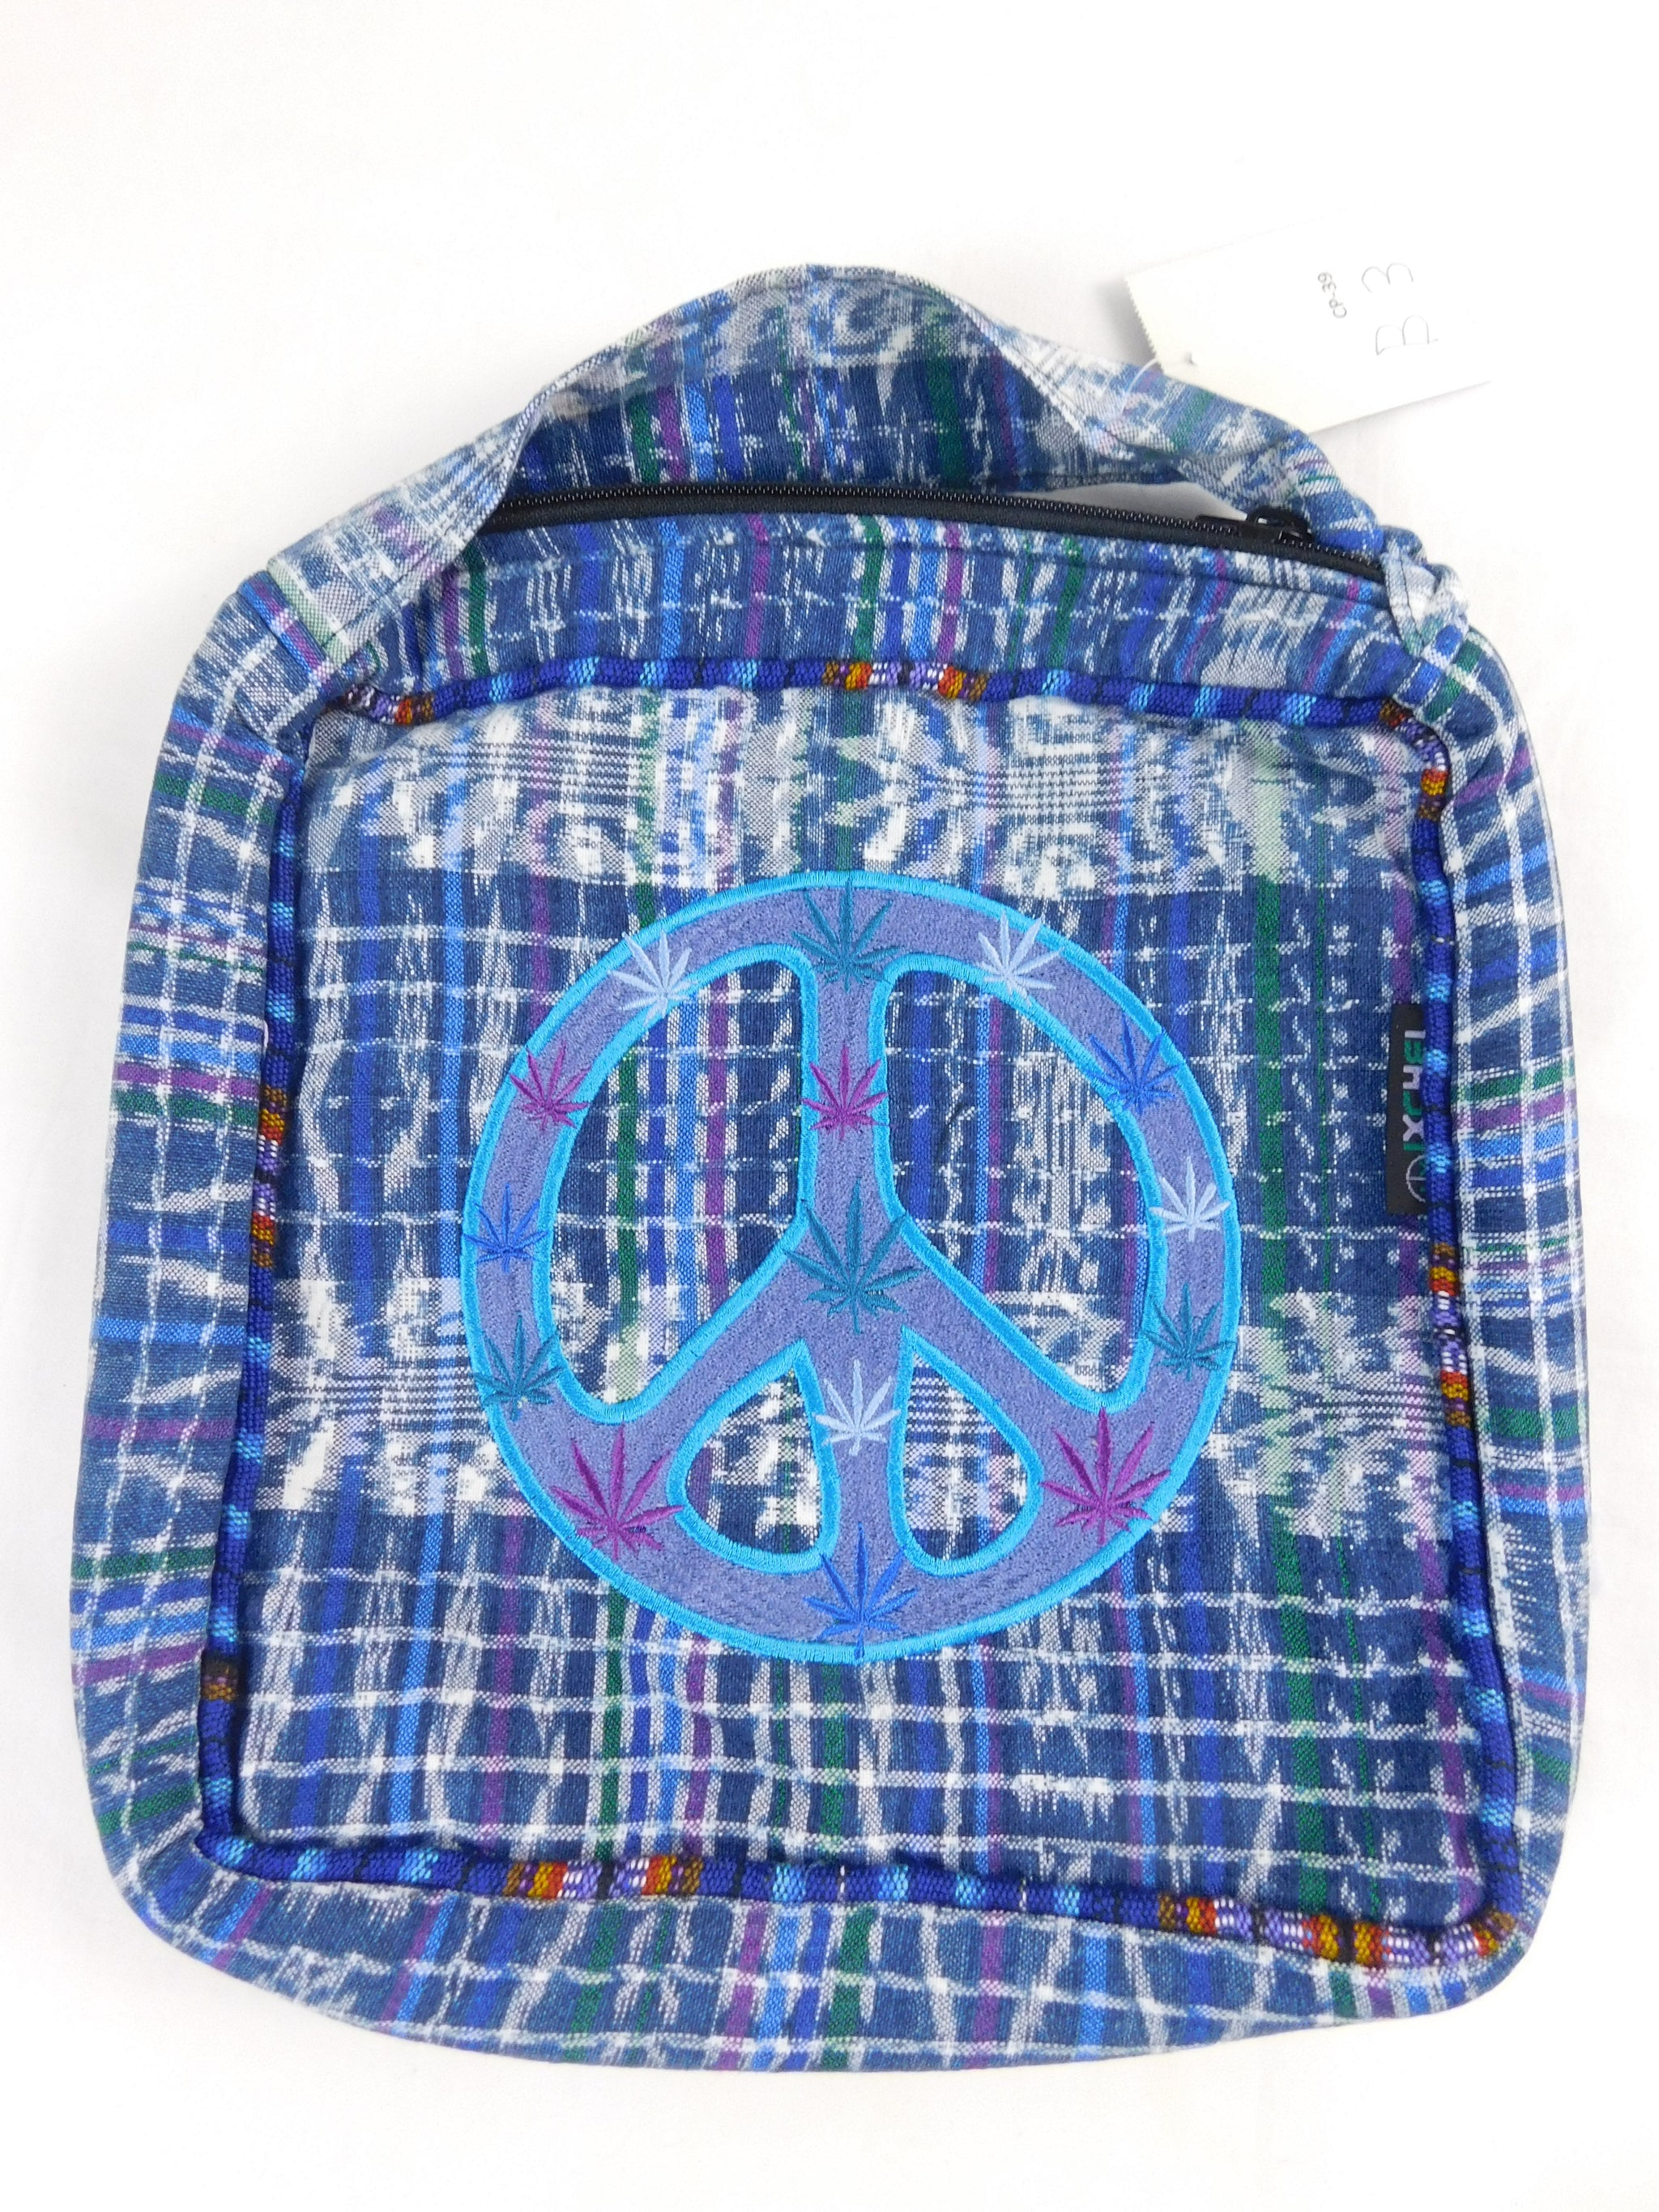 Hand-Woven Peace Bag 10" x 10"